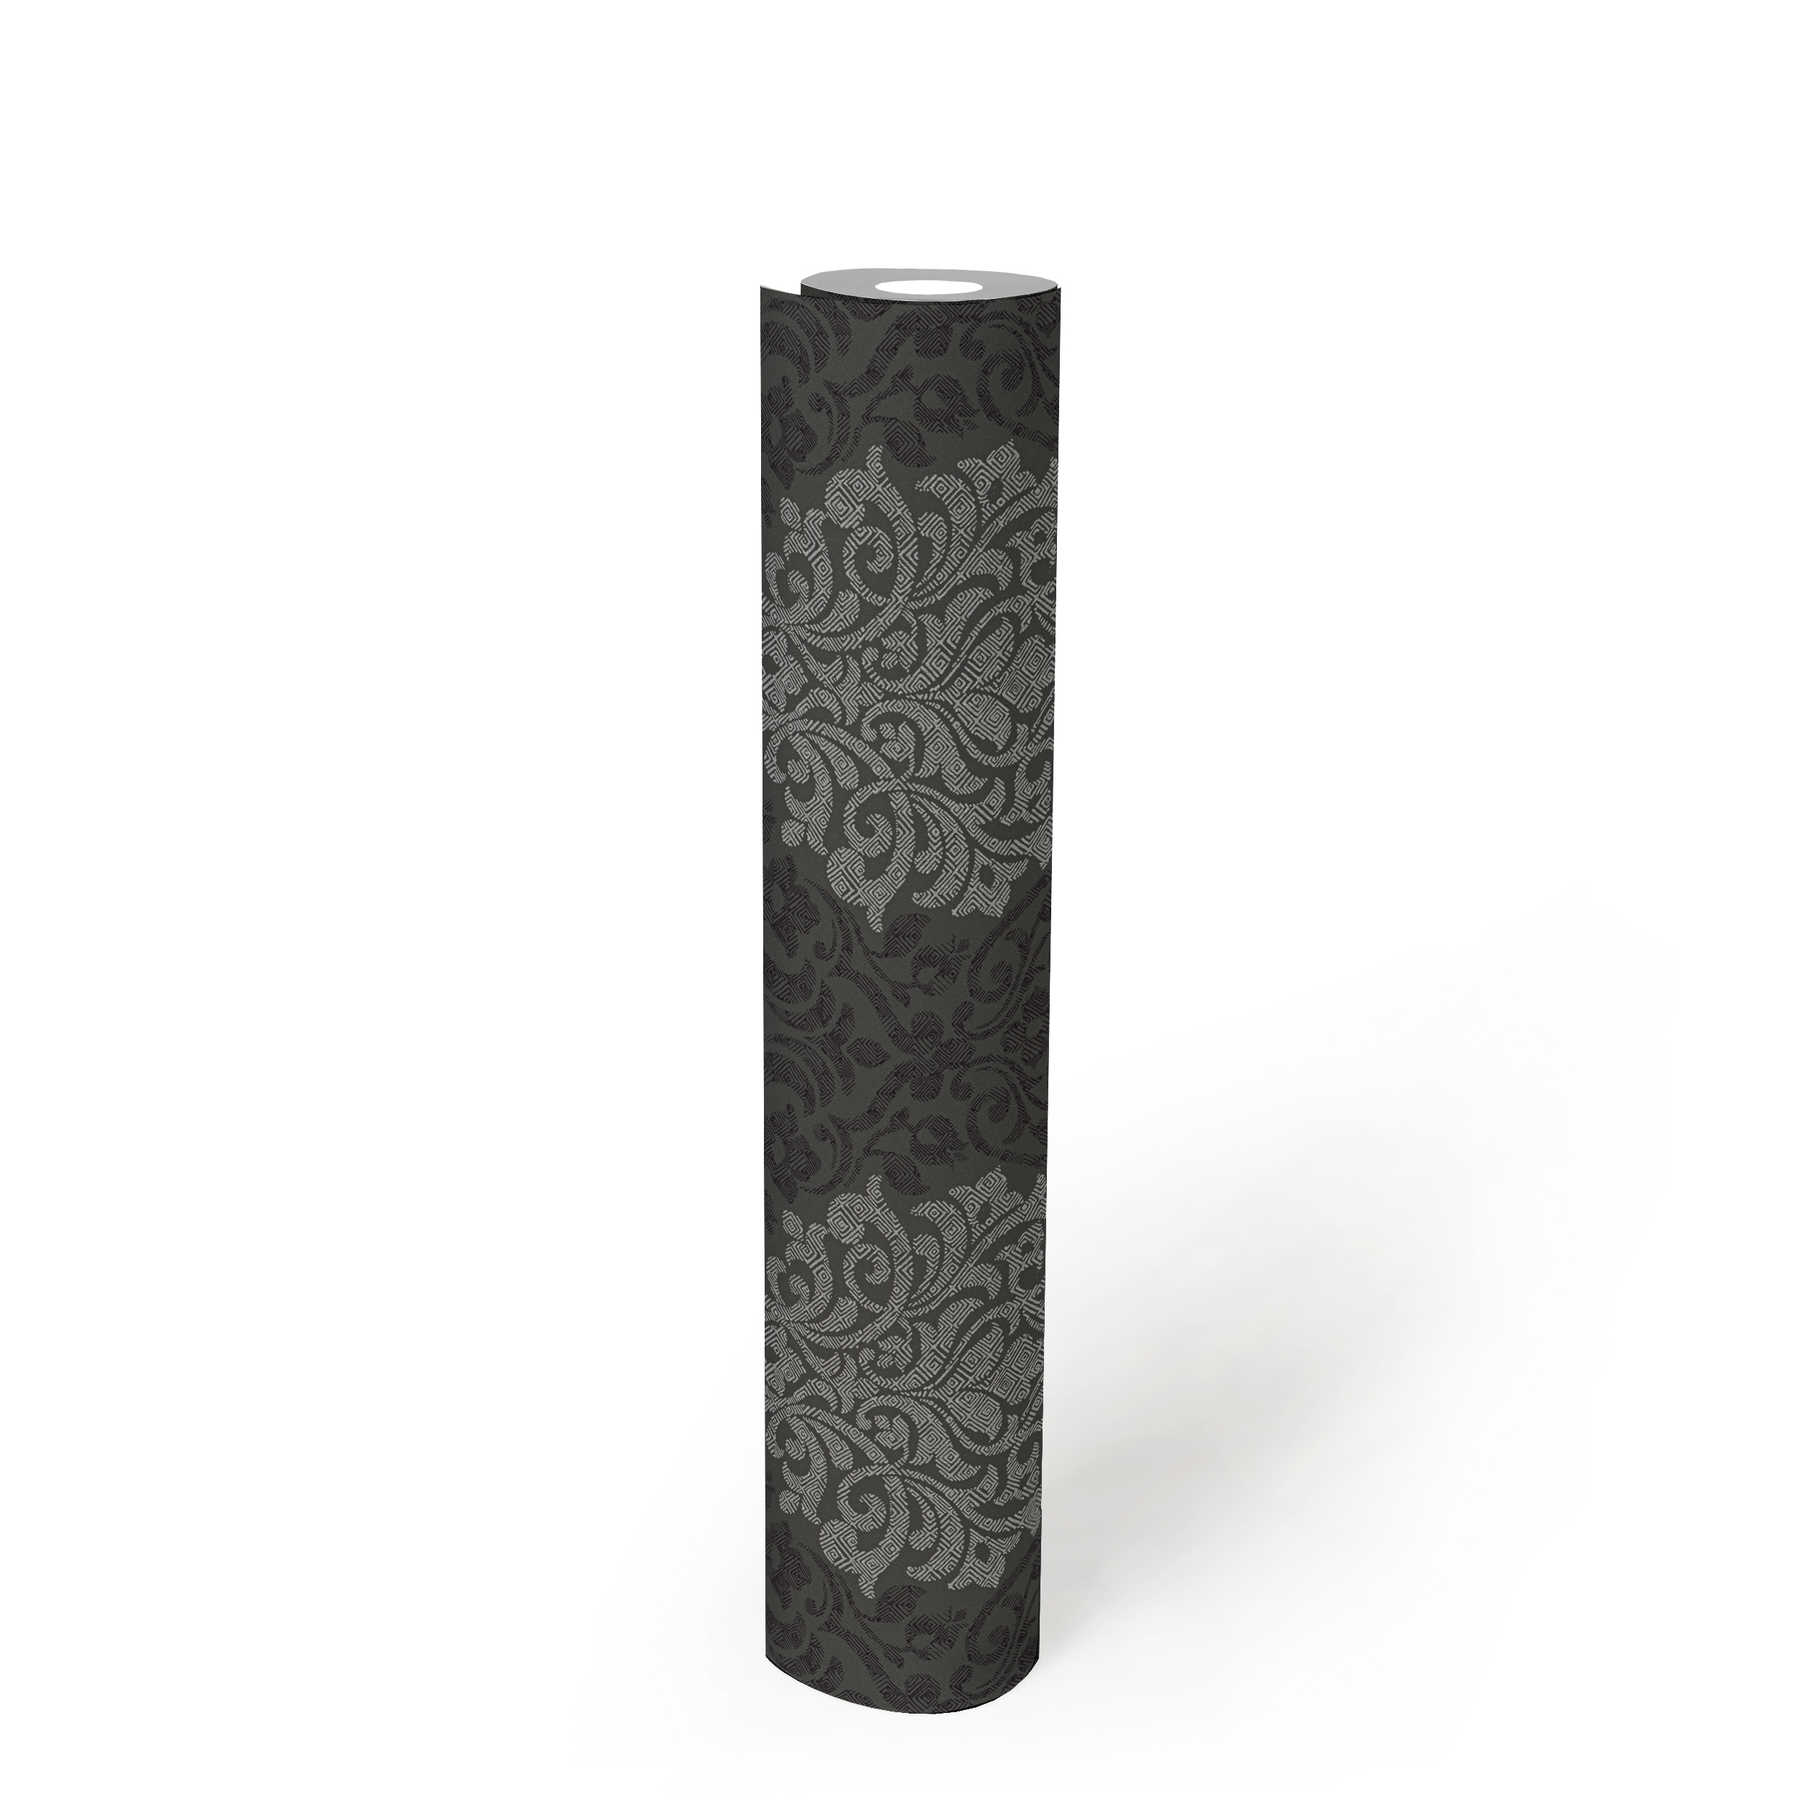             Floral ornamental wallpaper diamond pattern in ethnic style - silver, black, grey
        